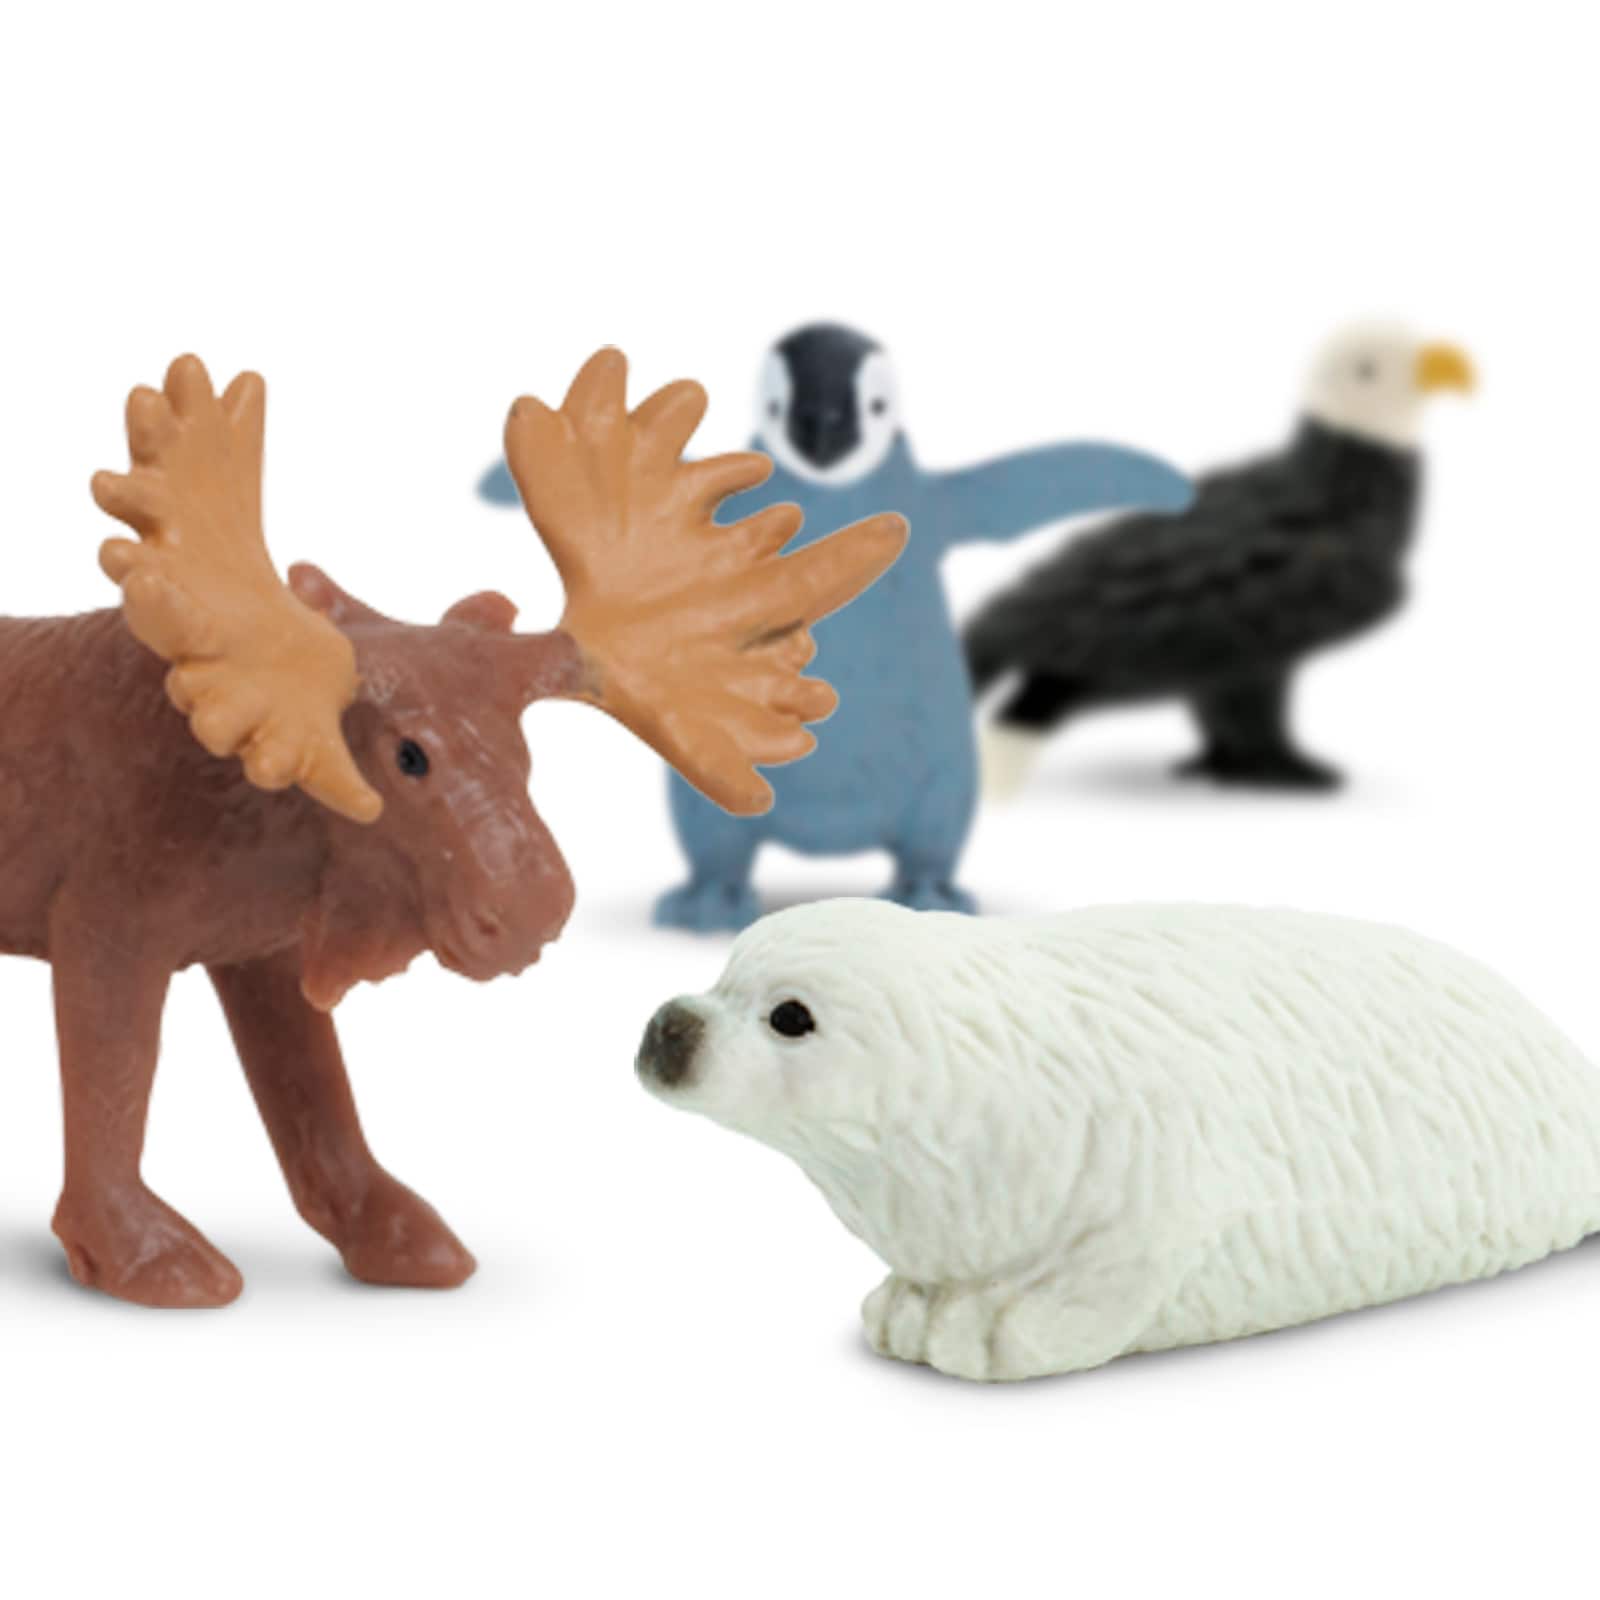 Arctic Pack Mini Good Luck Figures Safari Ltd NEW Toys Educational Animals 